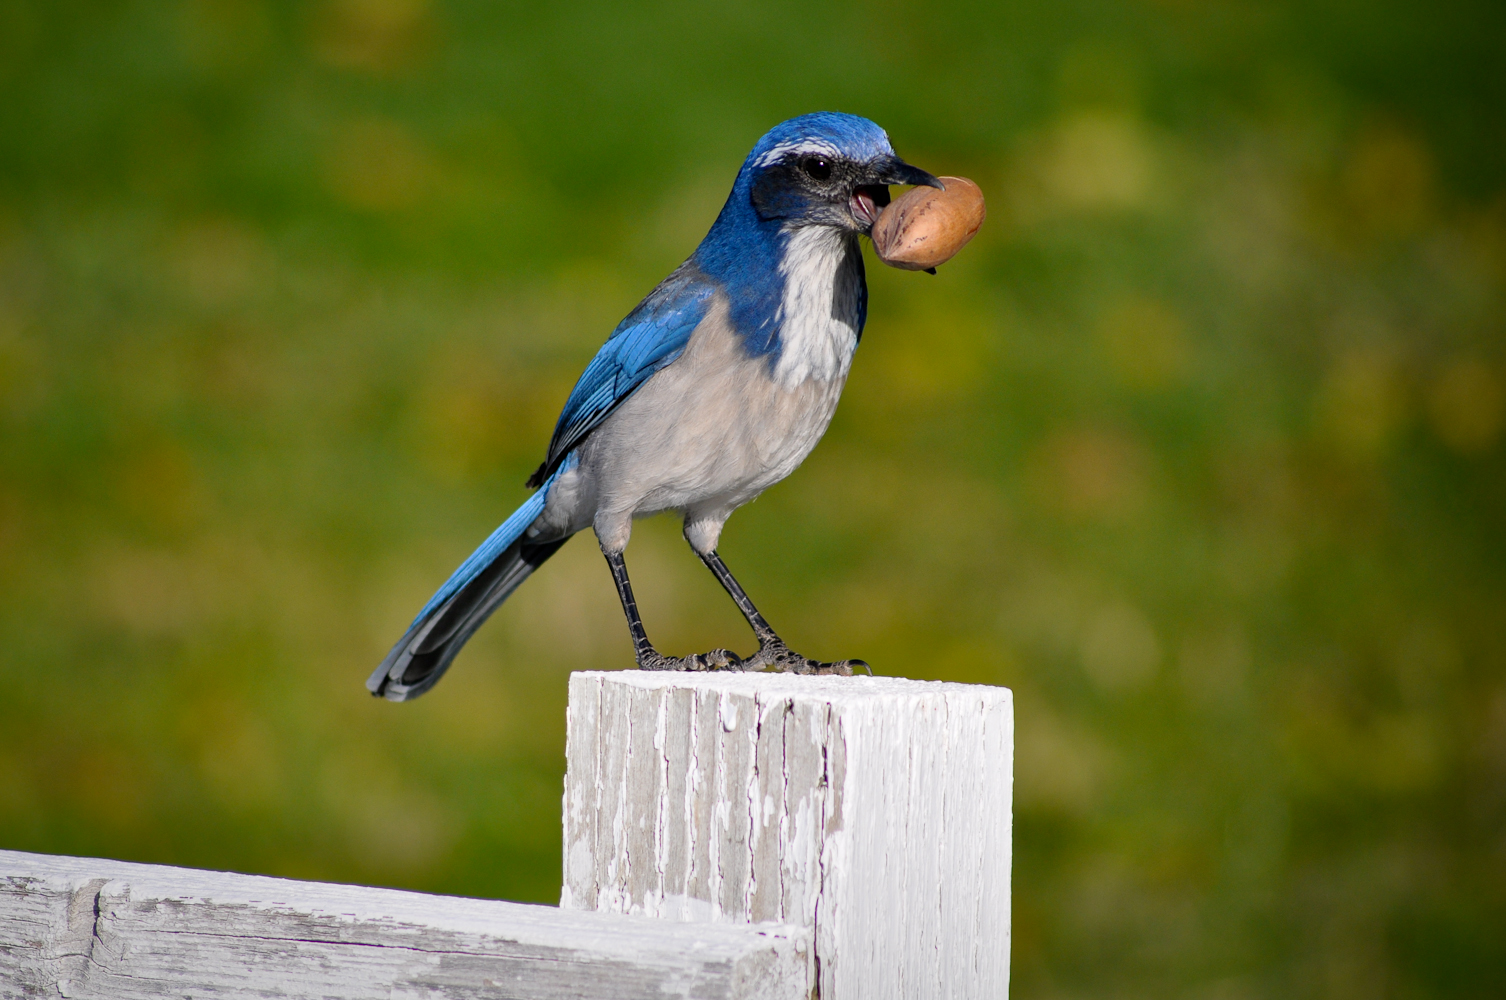 A bird eating